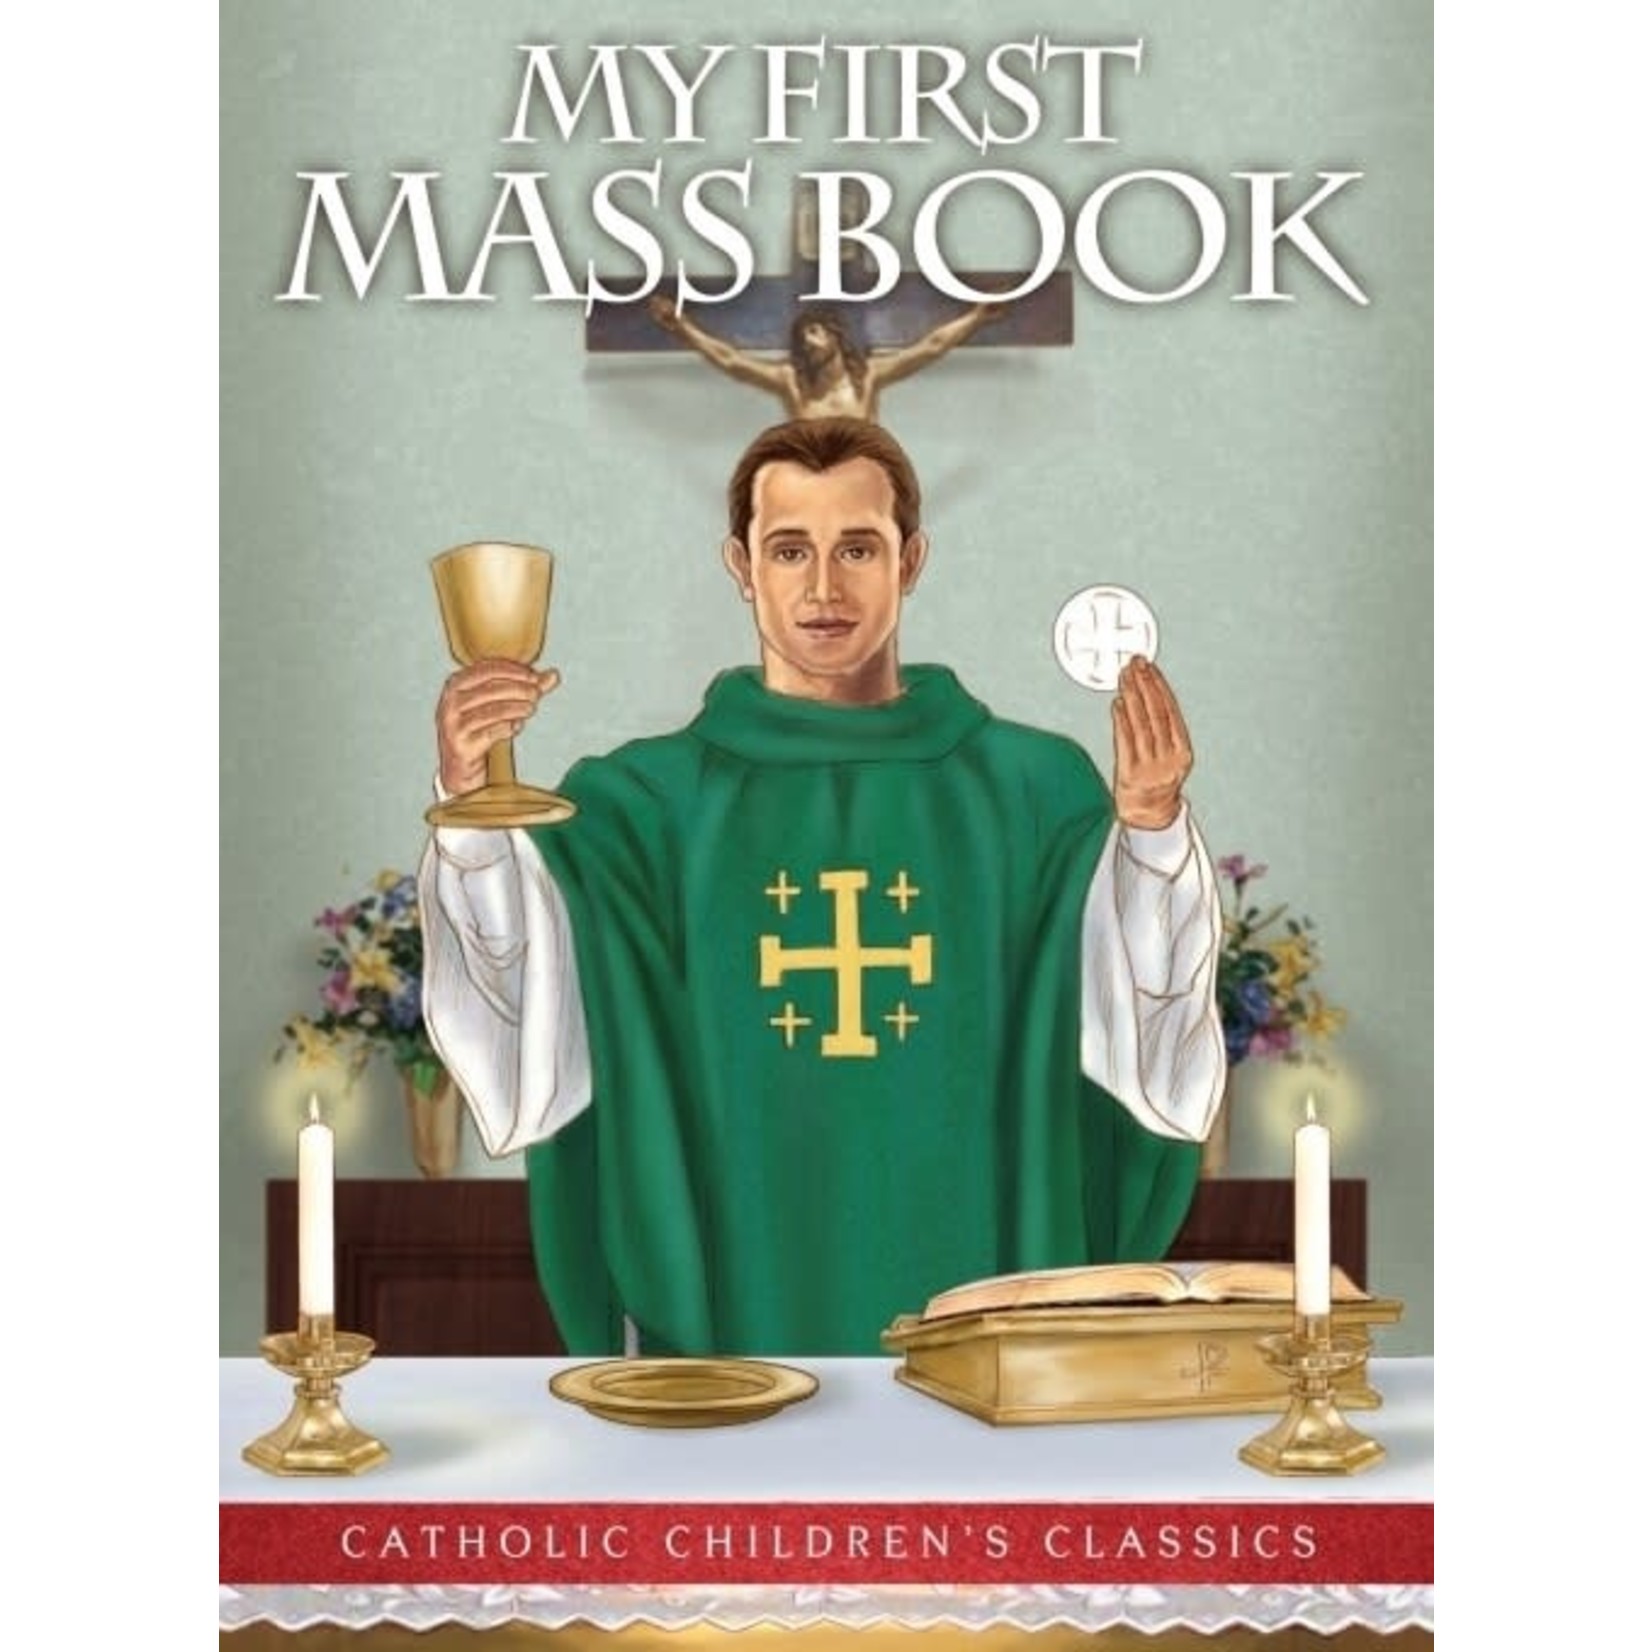 My First Mass Book Catholic Children’s Classic